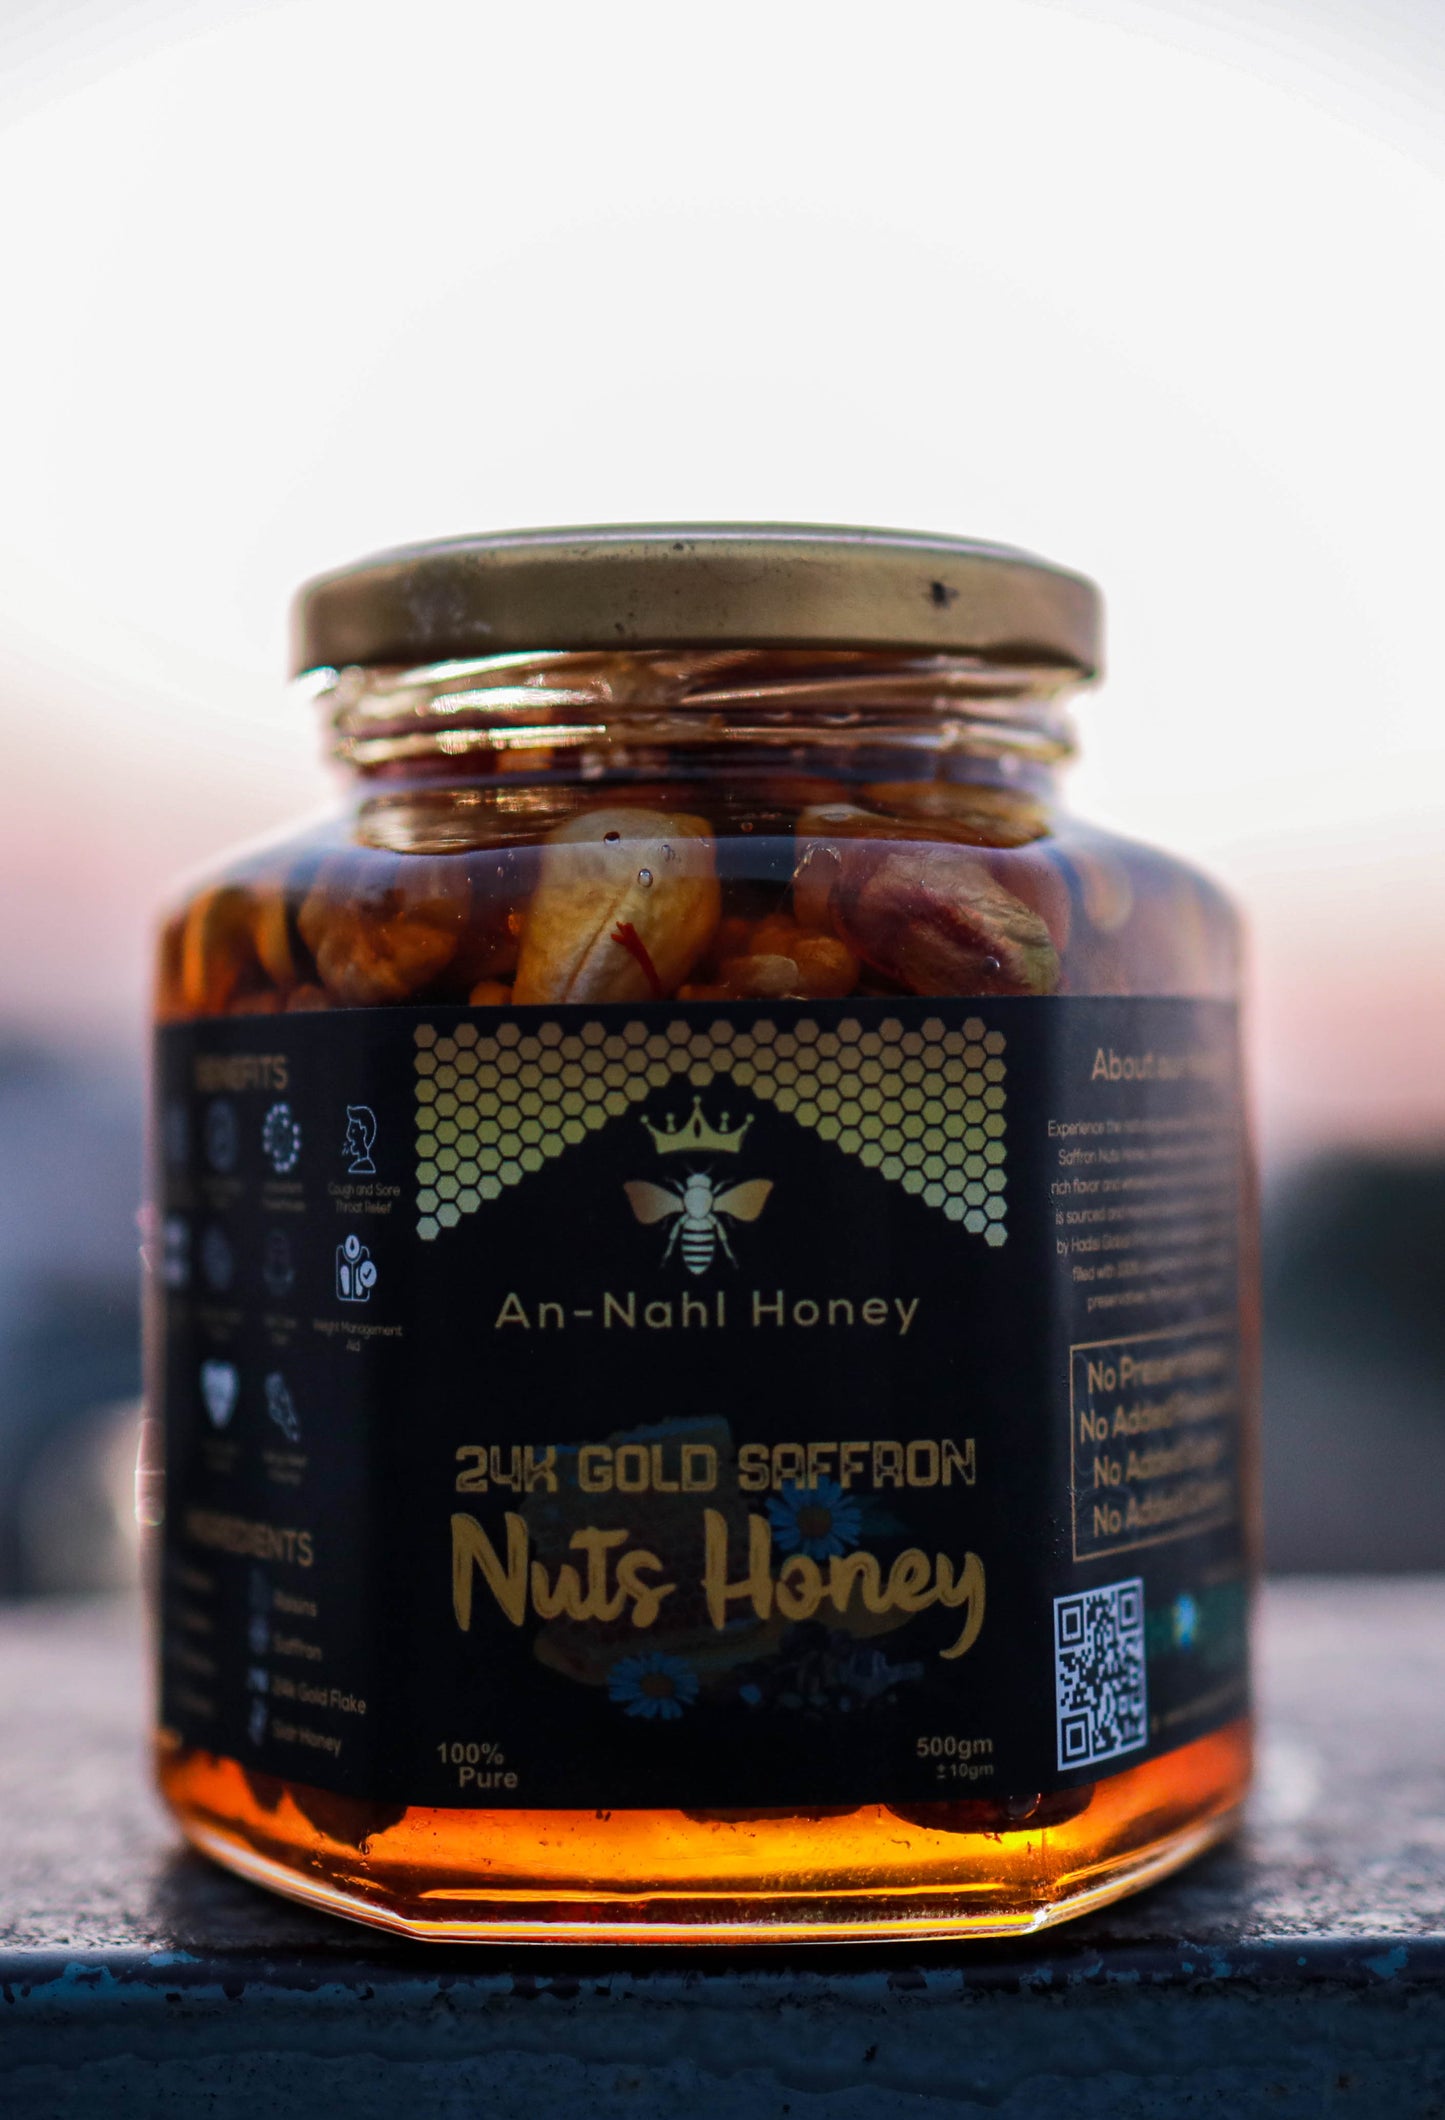 24k Gold Saffron Nuts Honey 500gm